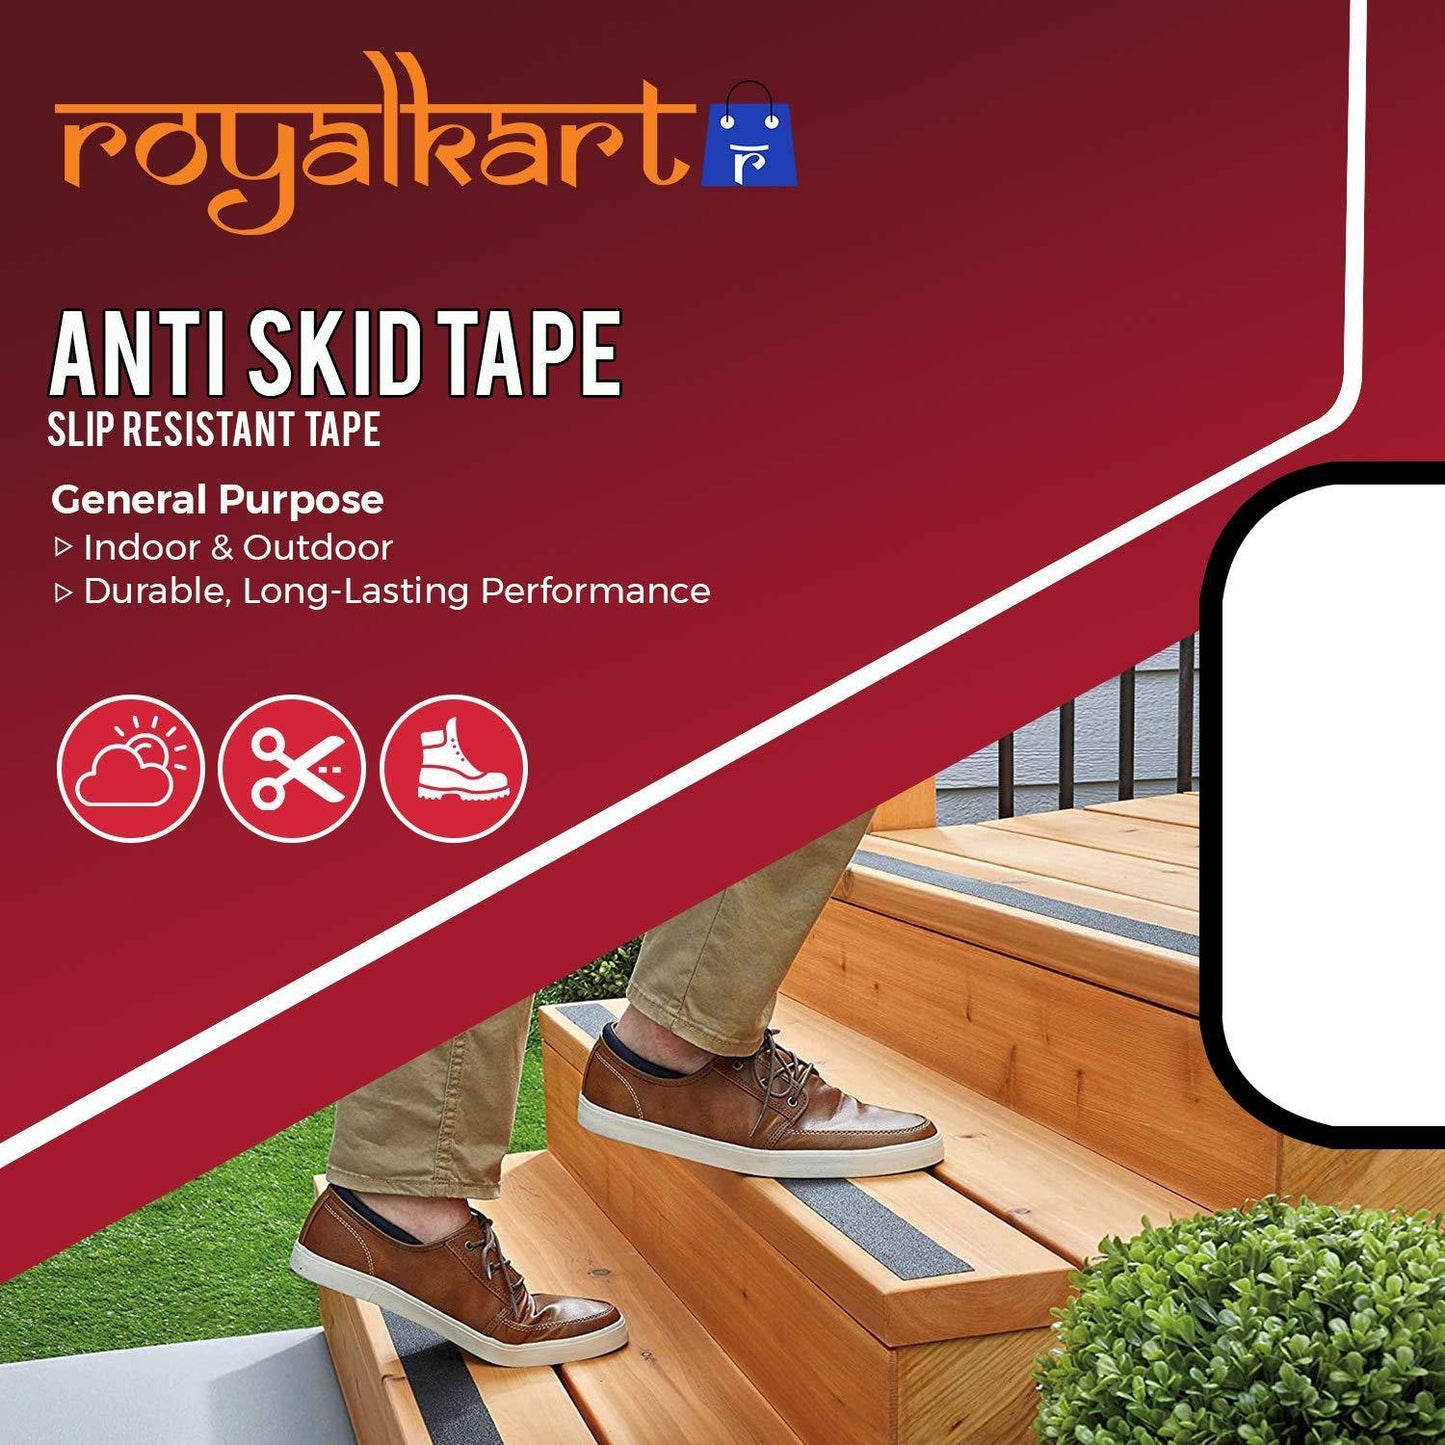 Royalkart anti skid tape